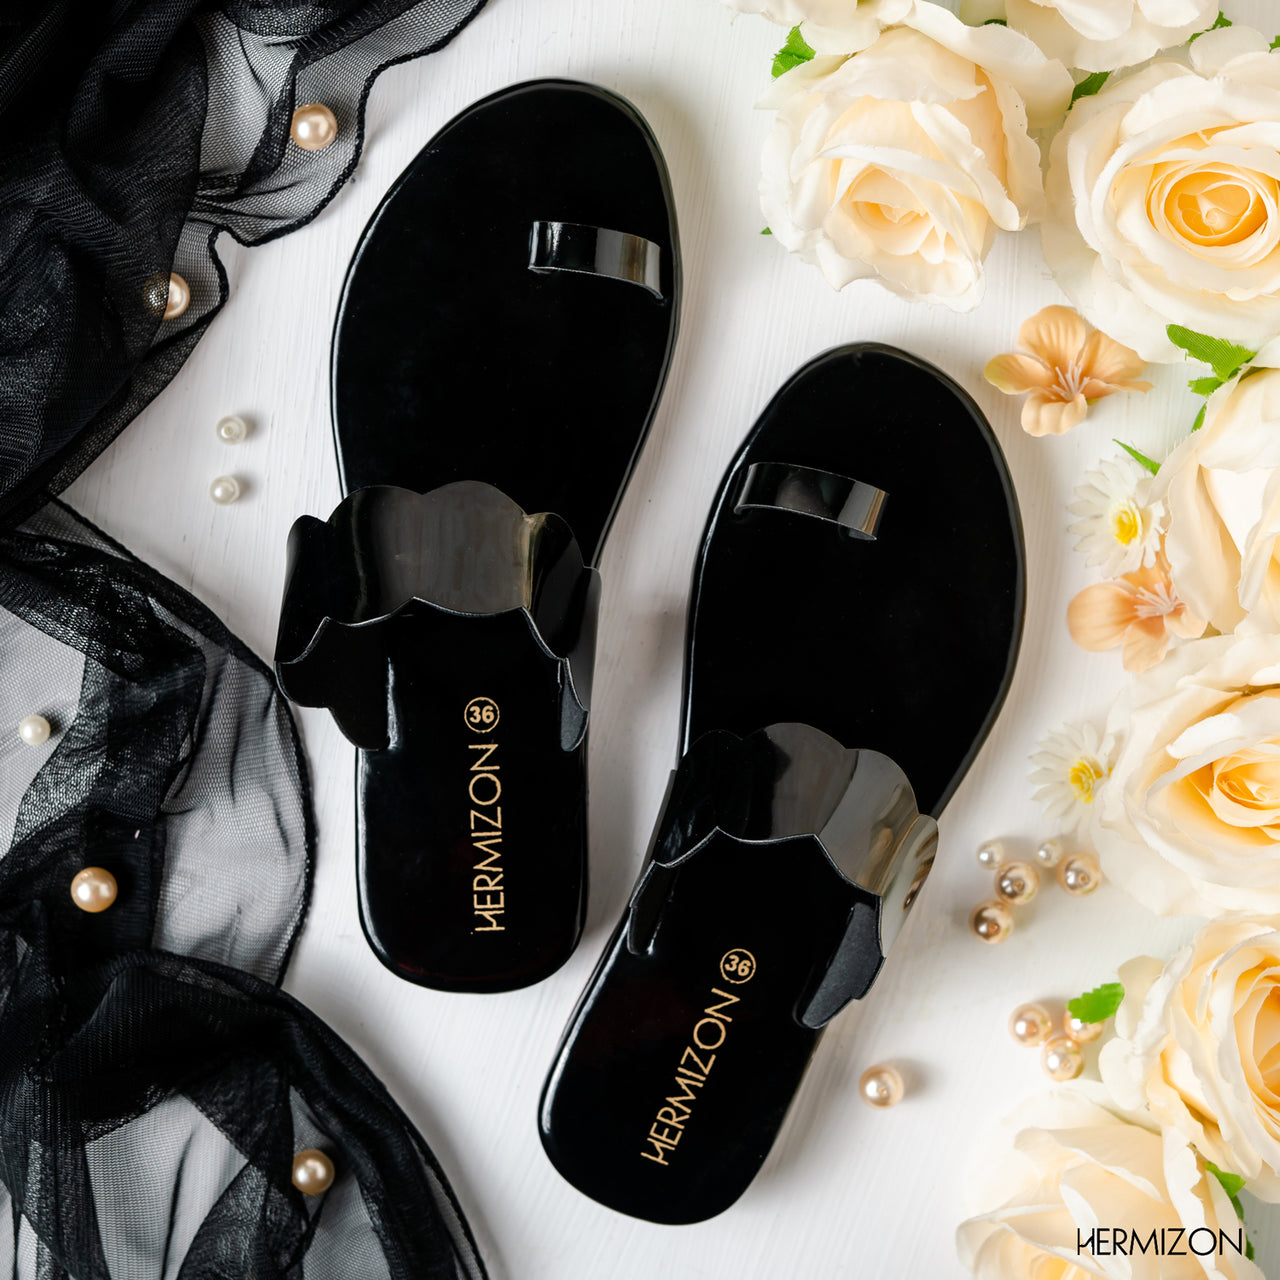 Kiera Black color flat sandals of hermizon brand